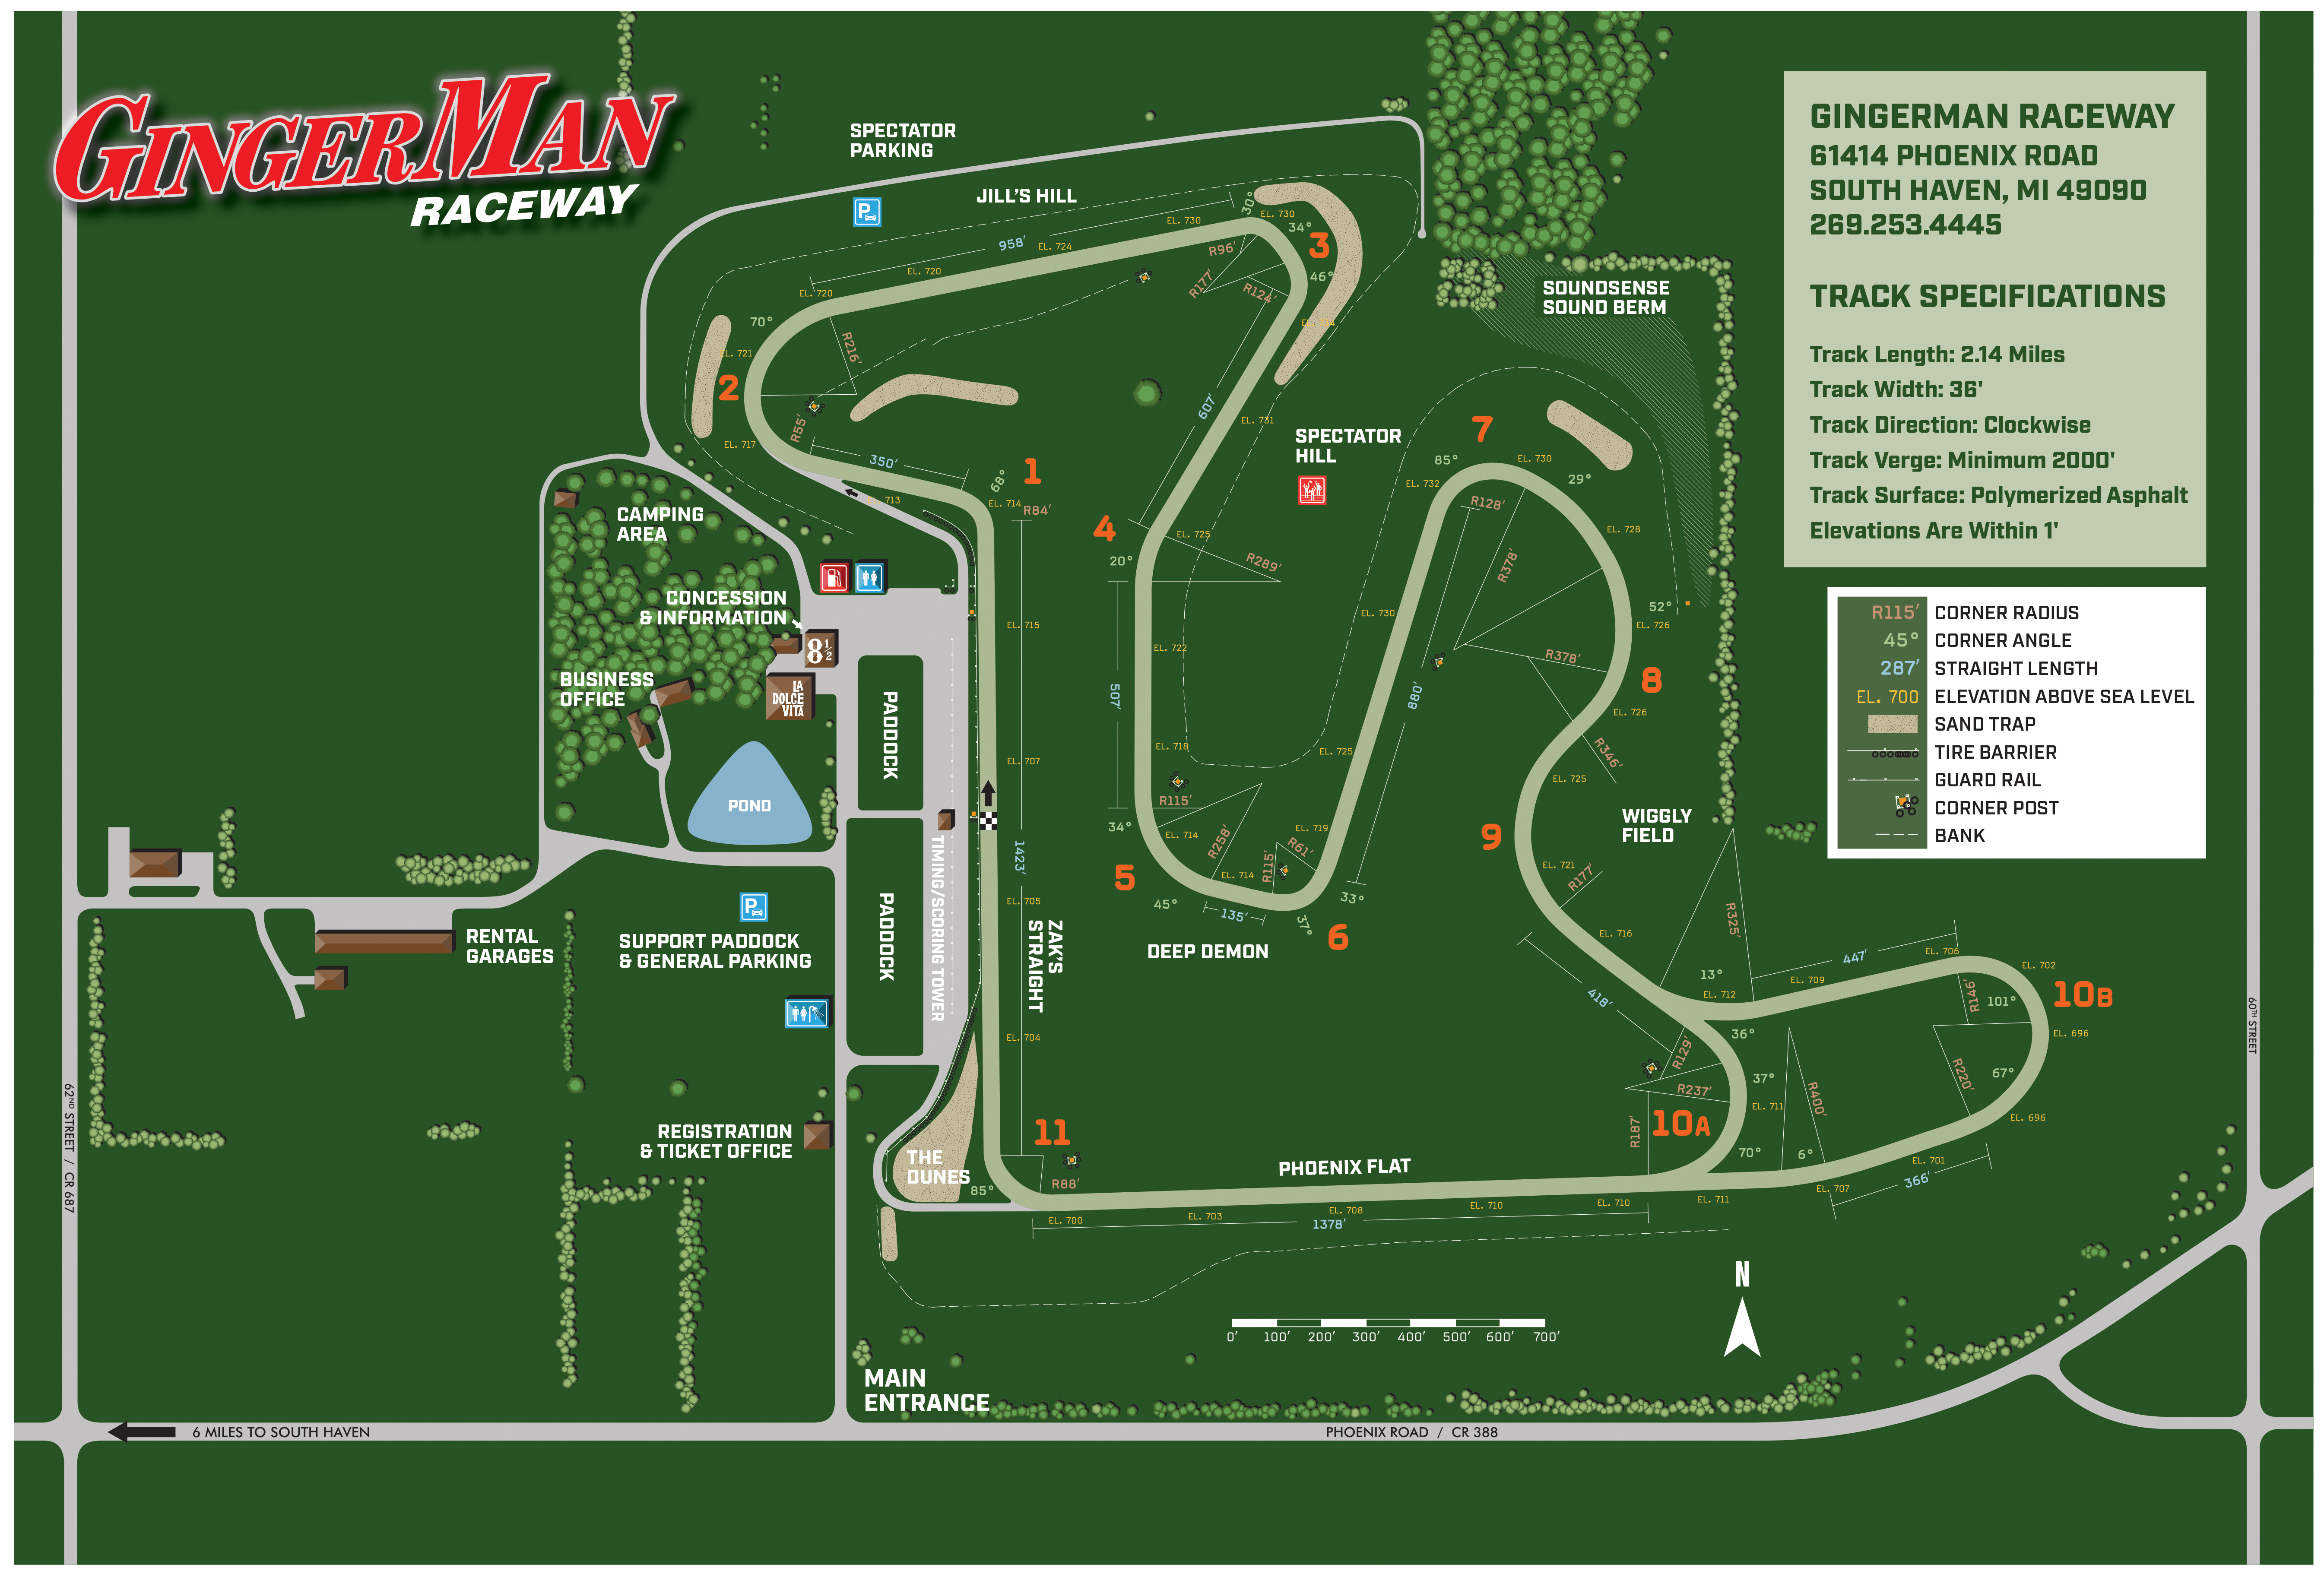 Tracks карты. ADM Raceway схема трассы. Схема трассы для картинга. Дрифт трасса схема. Трассы для курсинга схема.